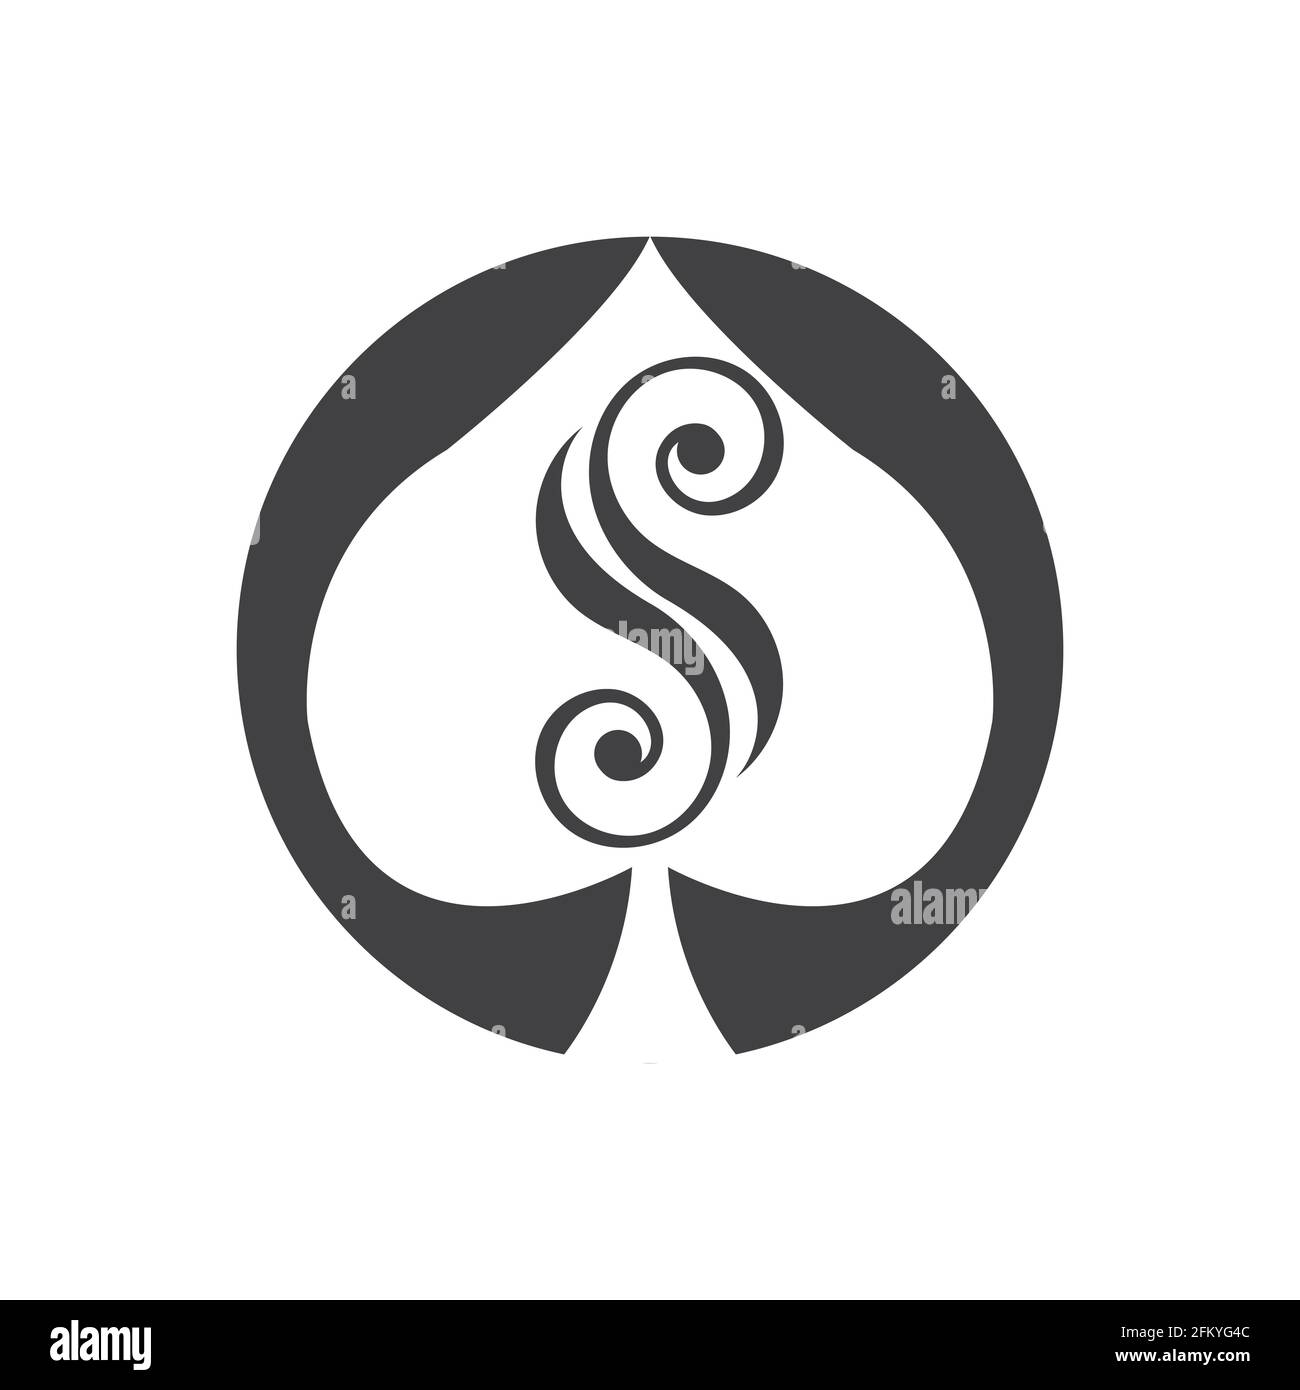 greek symbol for strength